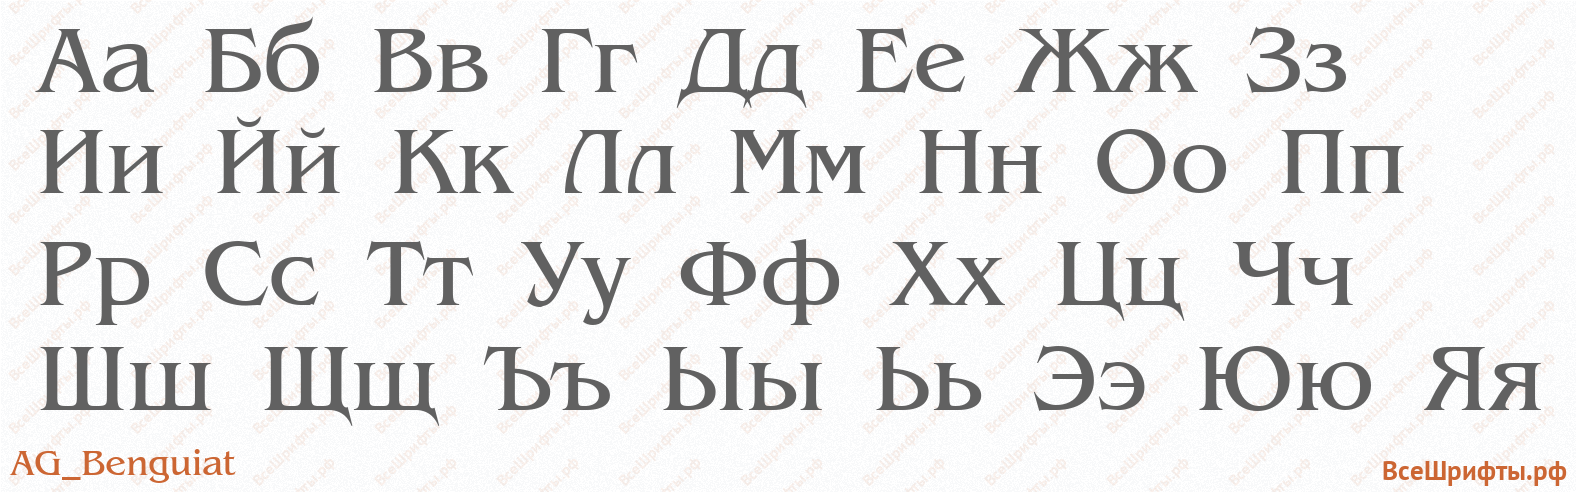 Шрифт AG_Benguiat с русскими буквами